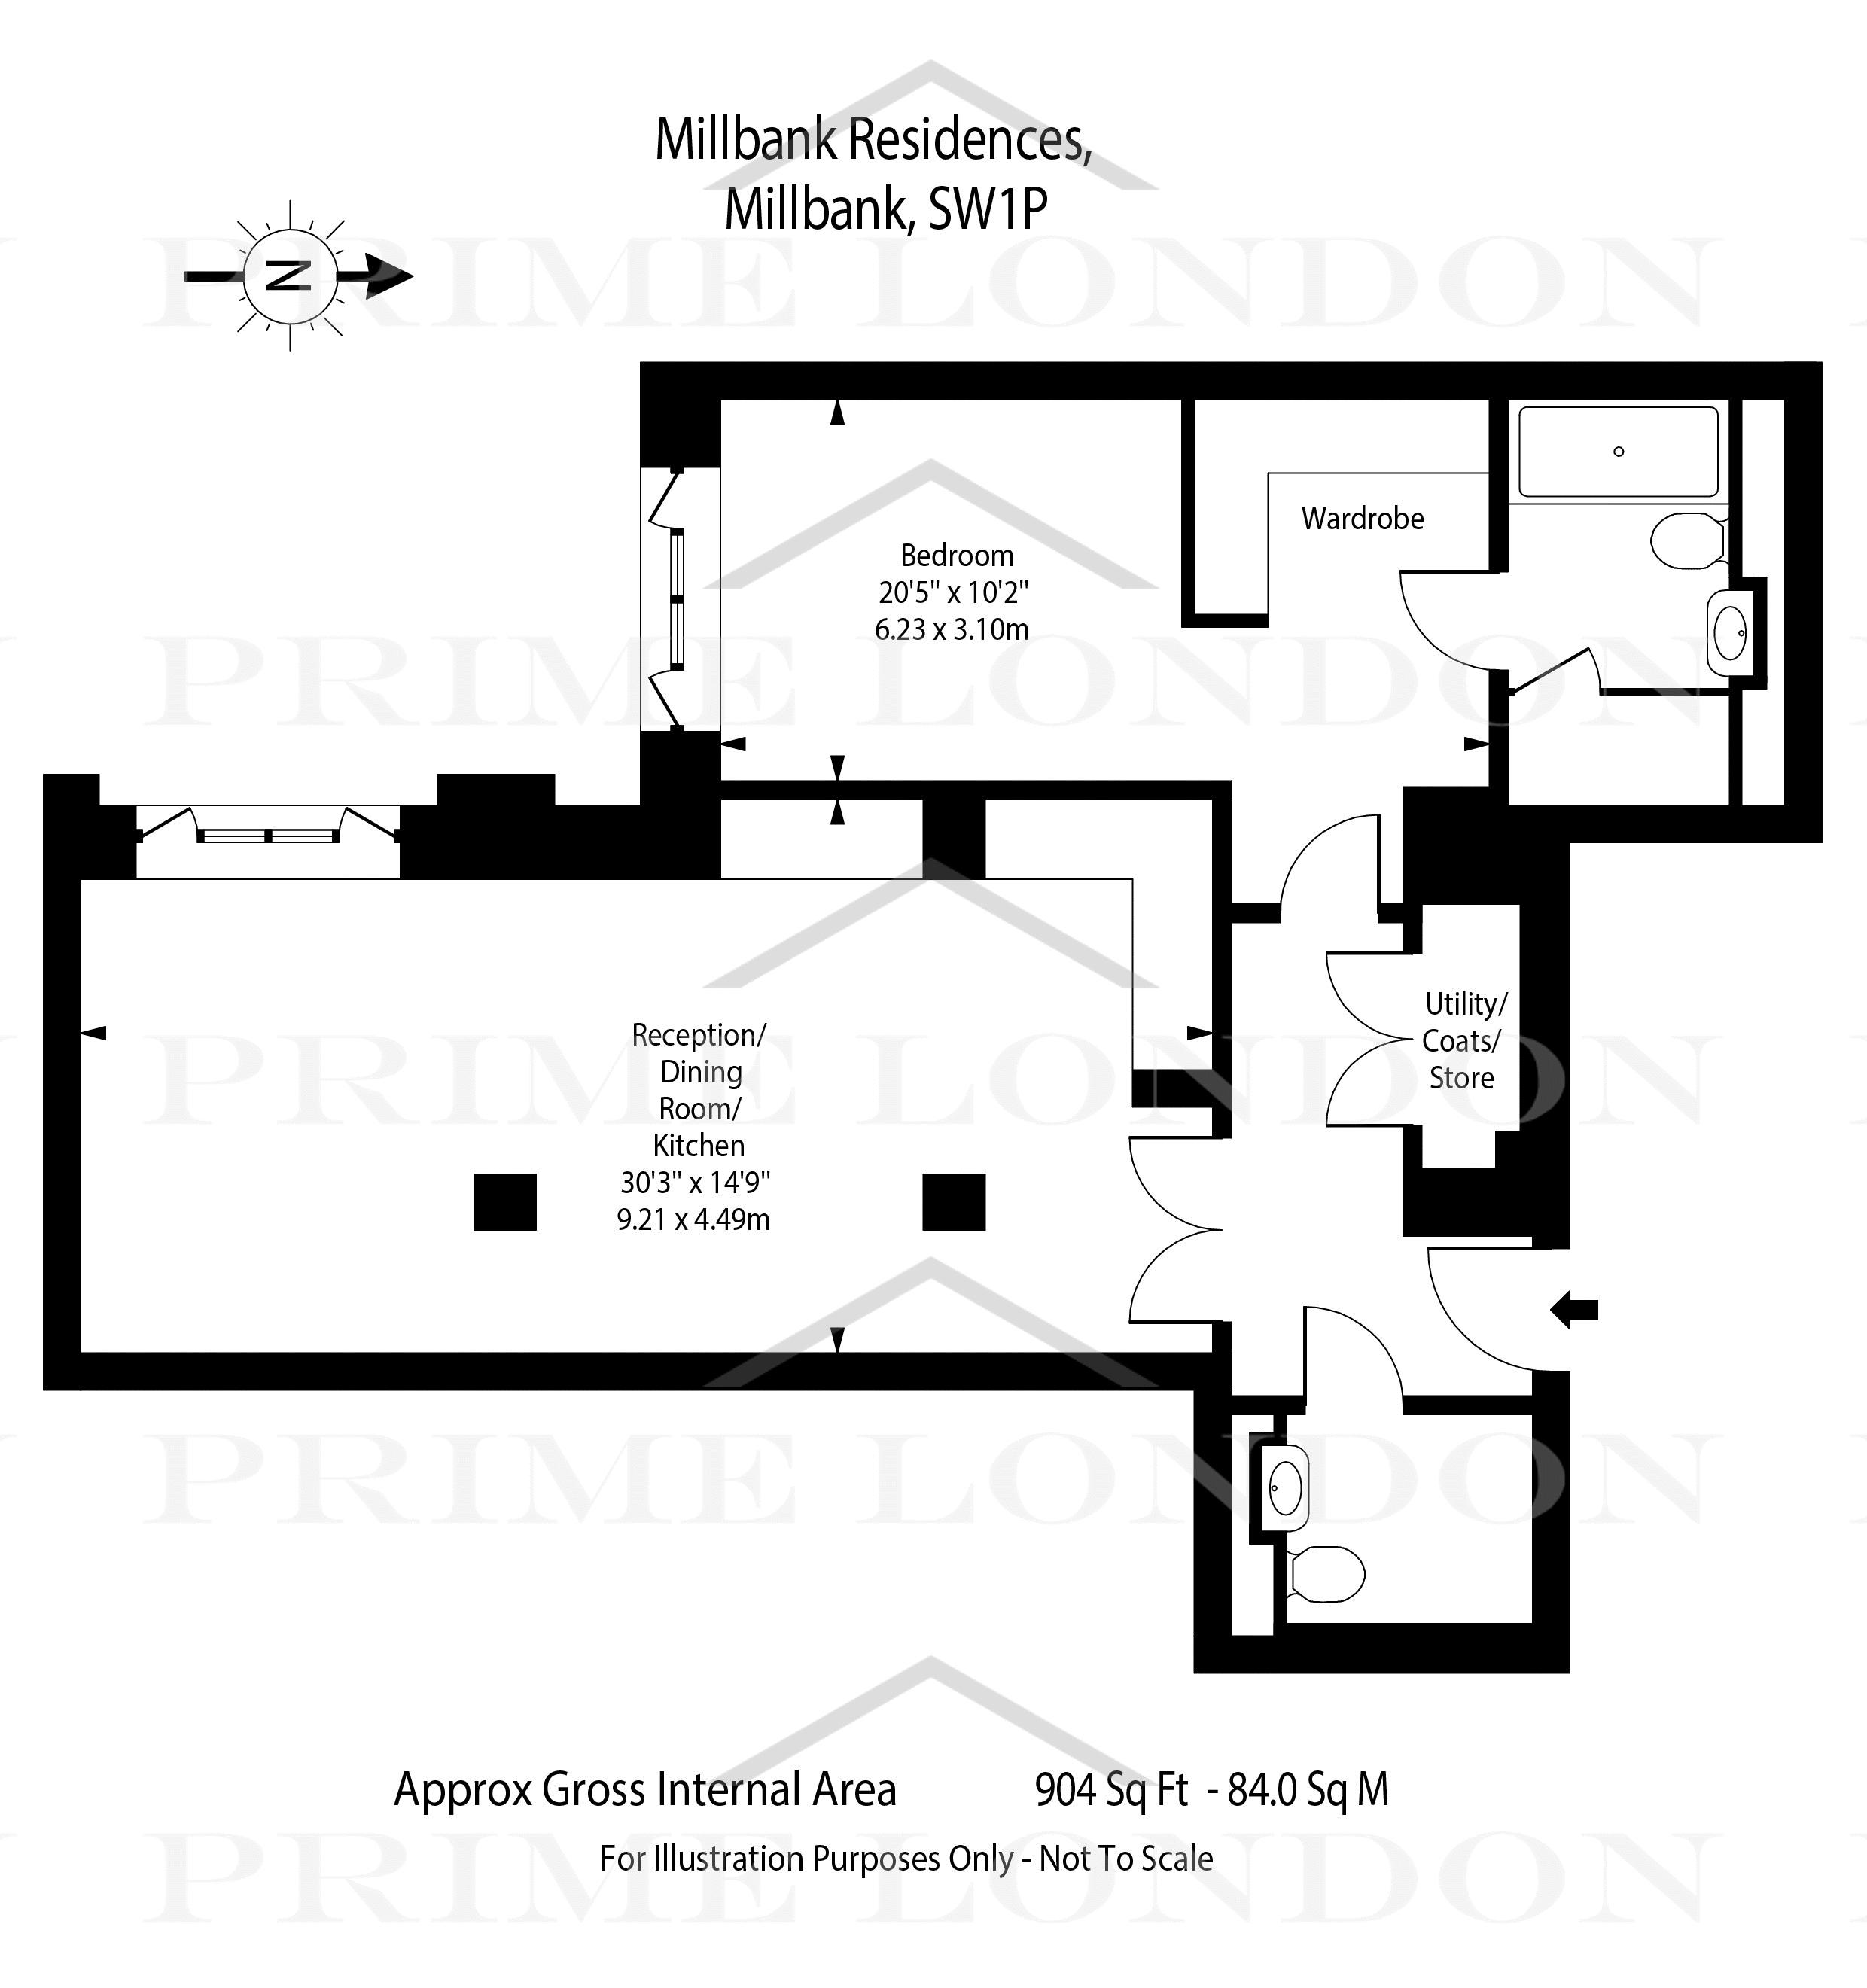 Millbank Residences Westminster